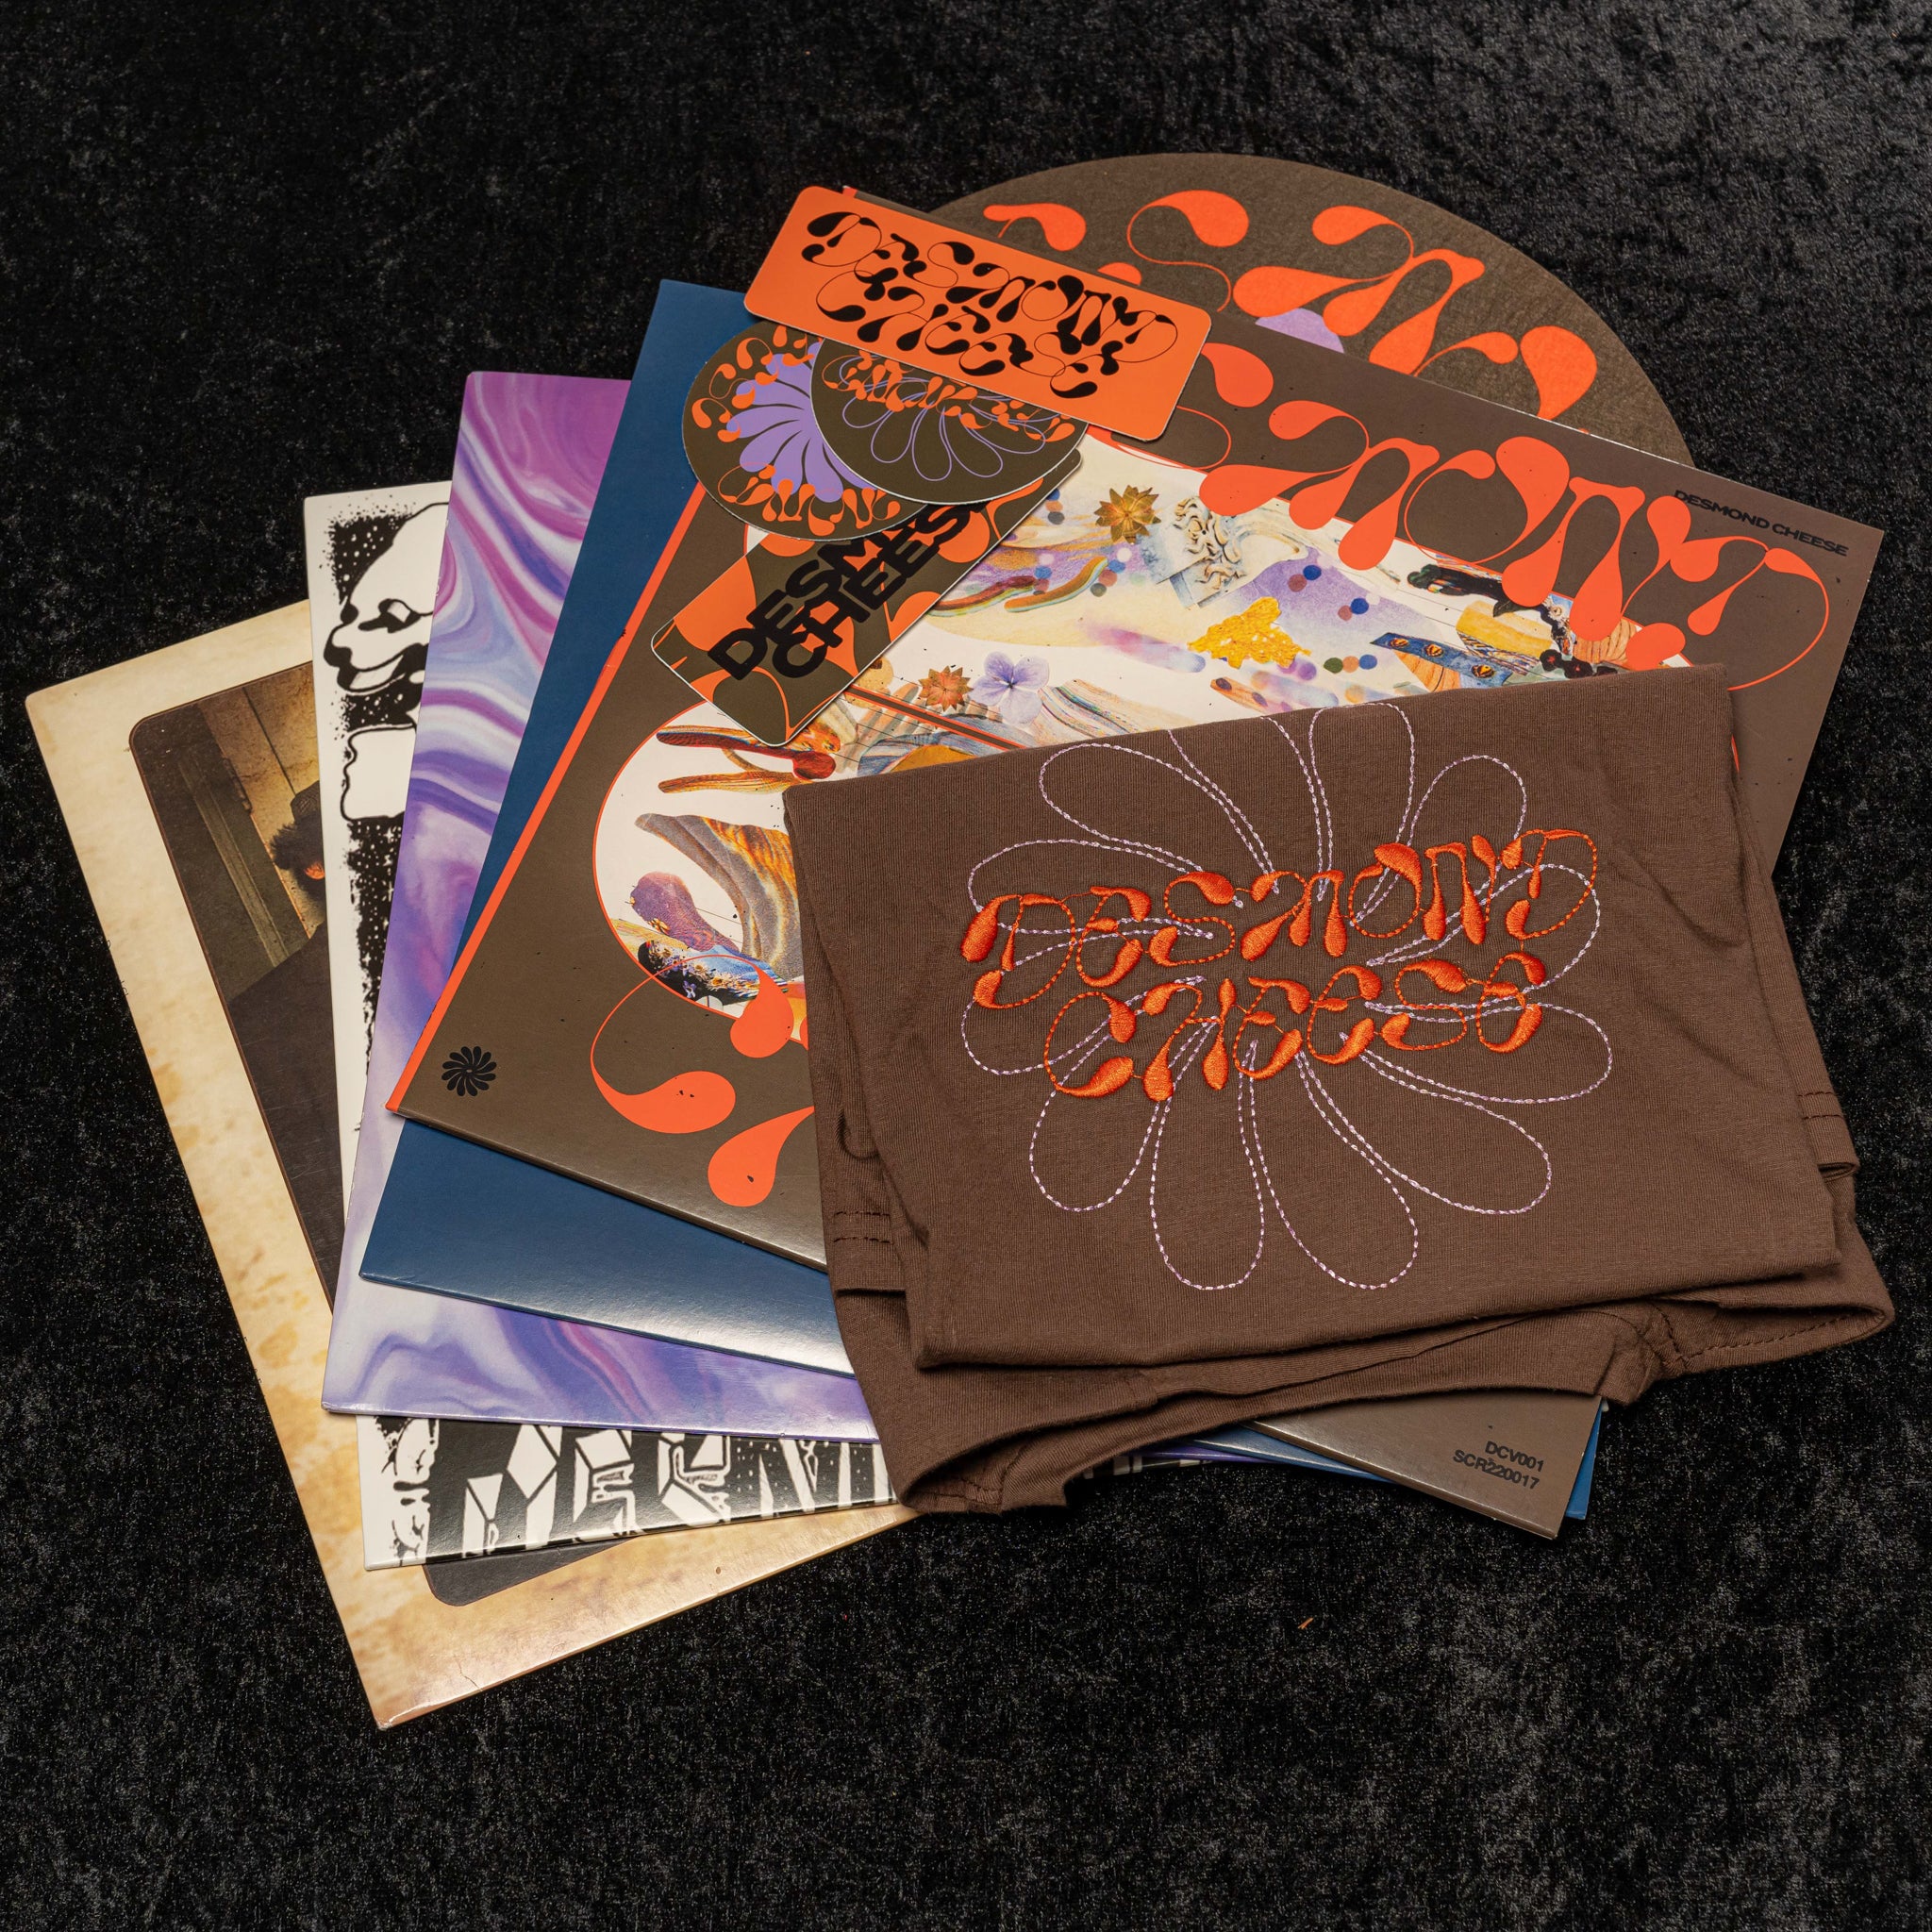 Desmond Cheese Big Bundle - Full Discography, Slipmat, Shirt and Stickers